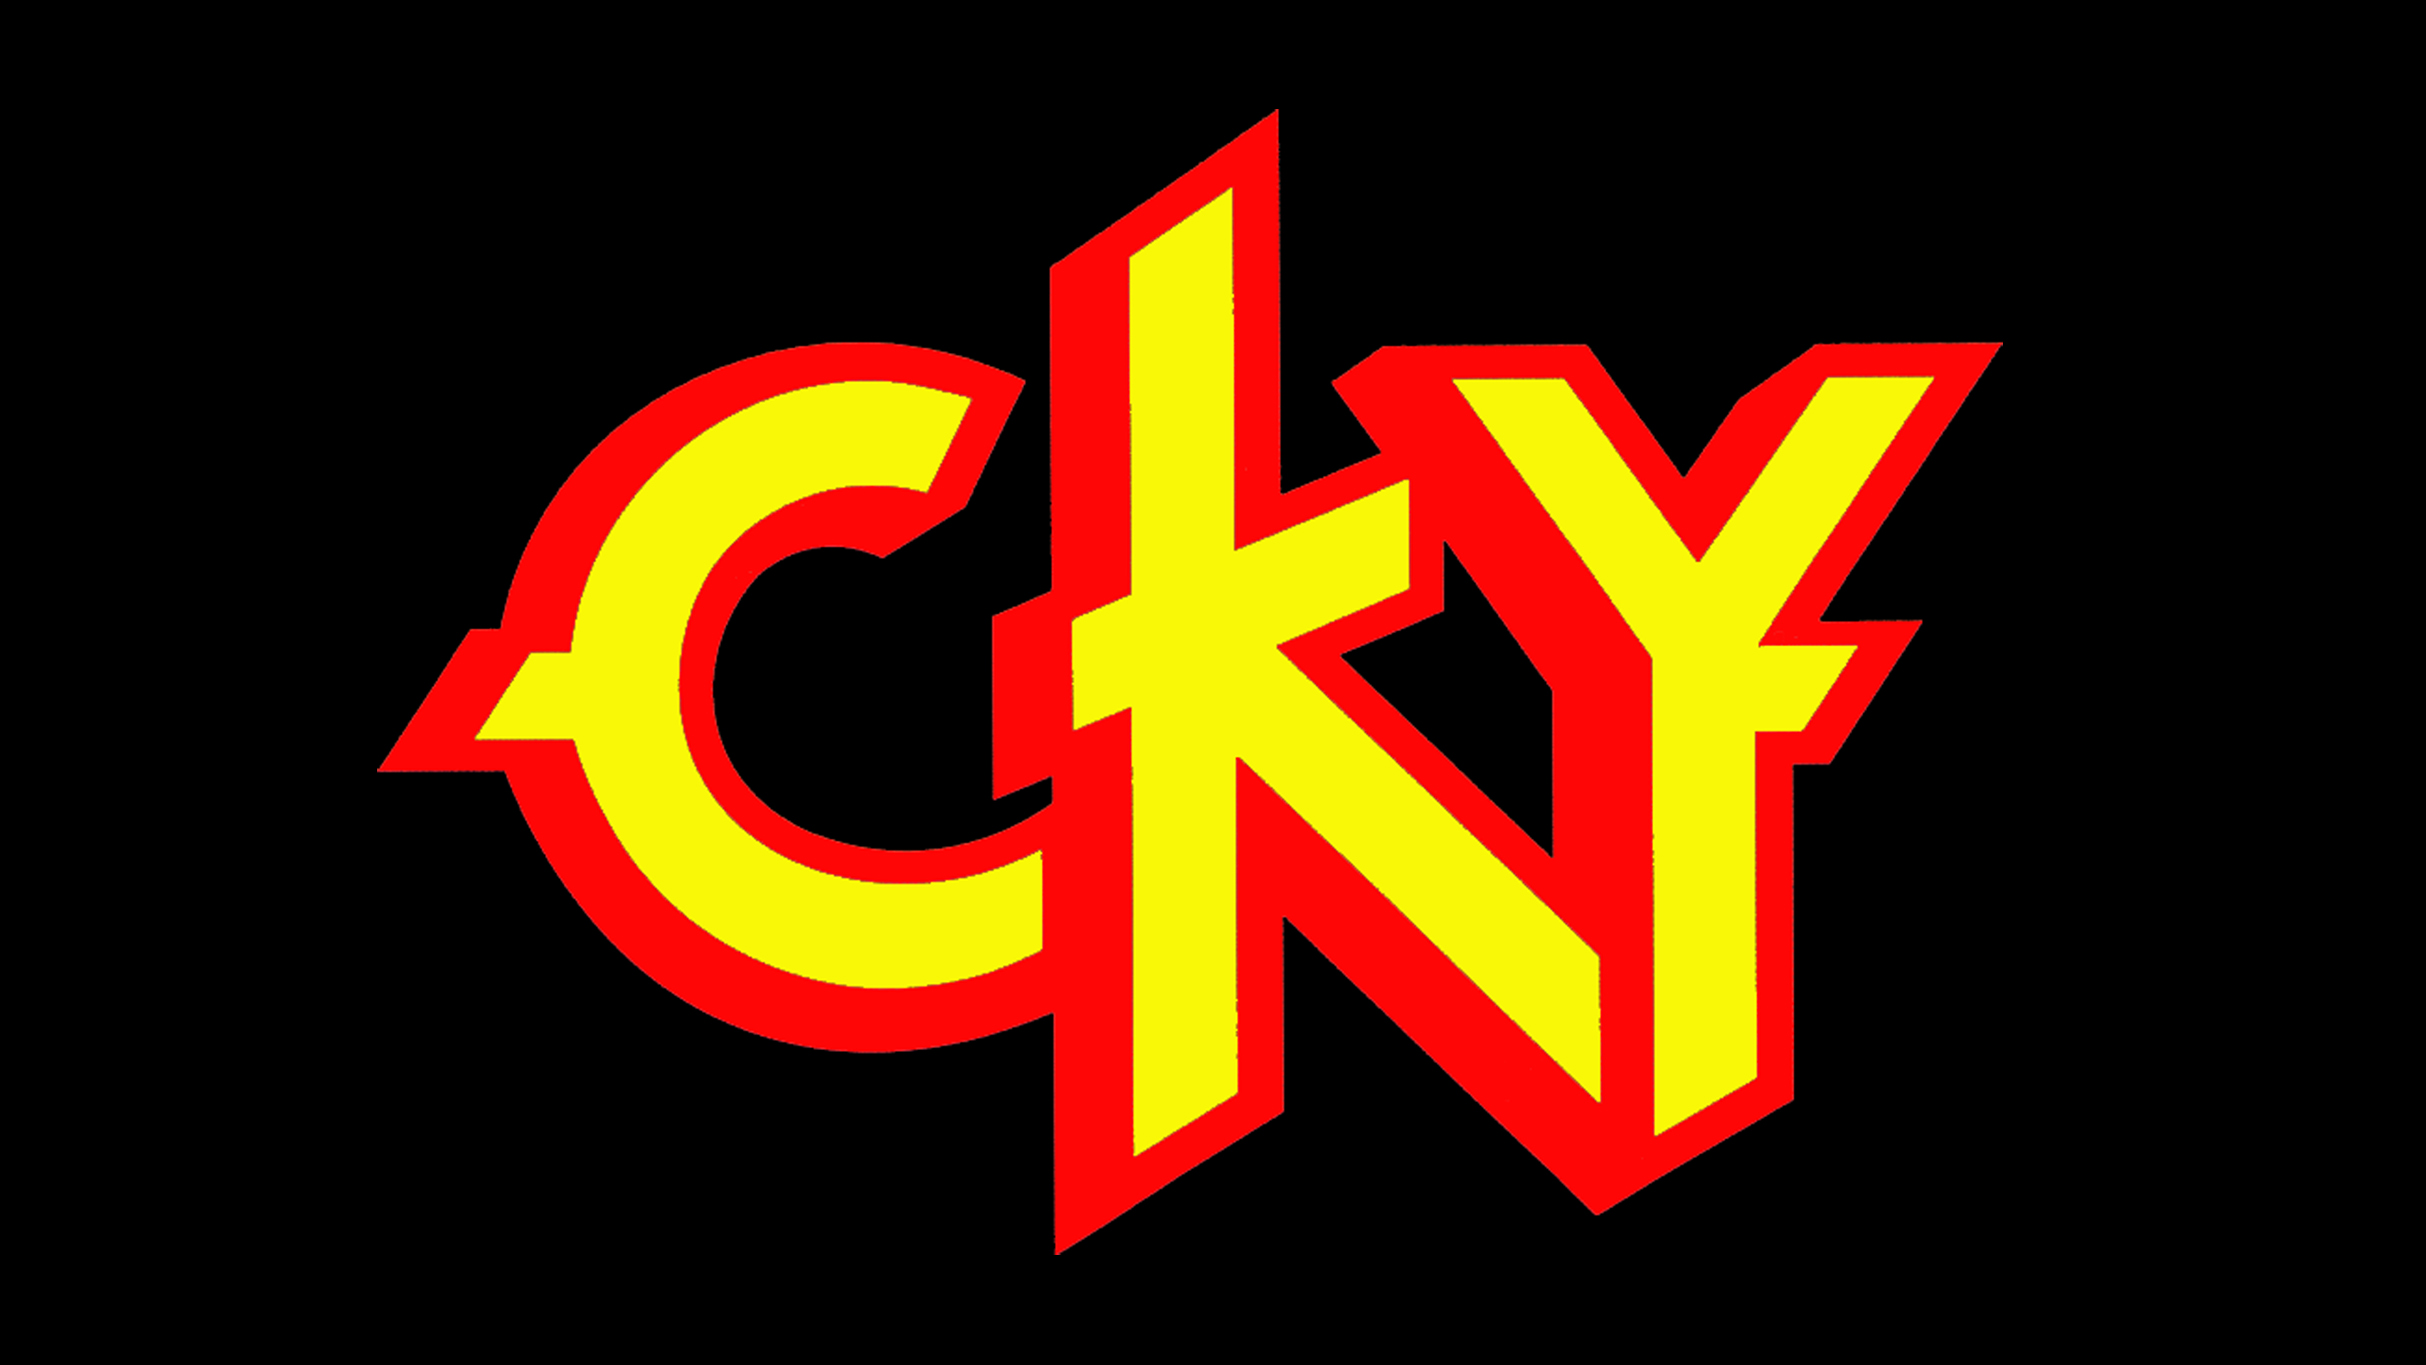 CKY - New Reason To Dream Tour